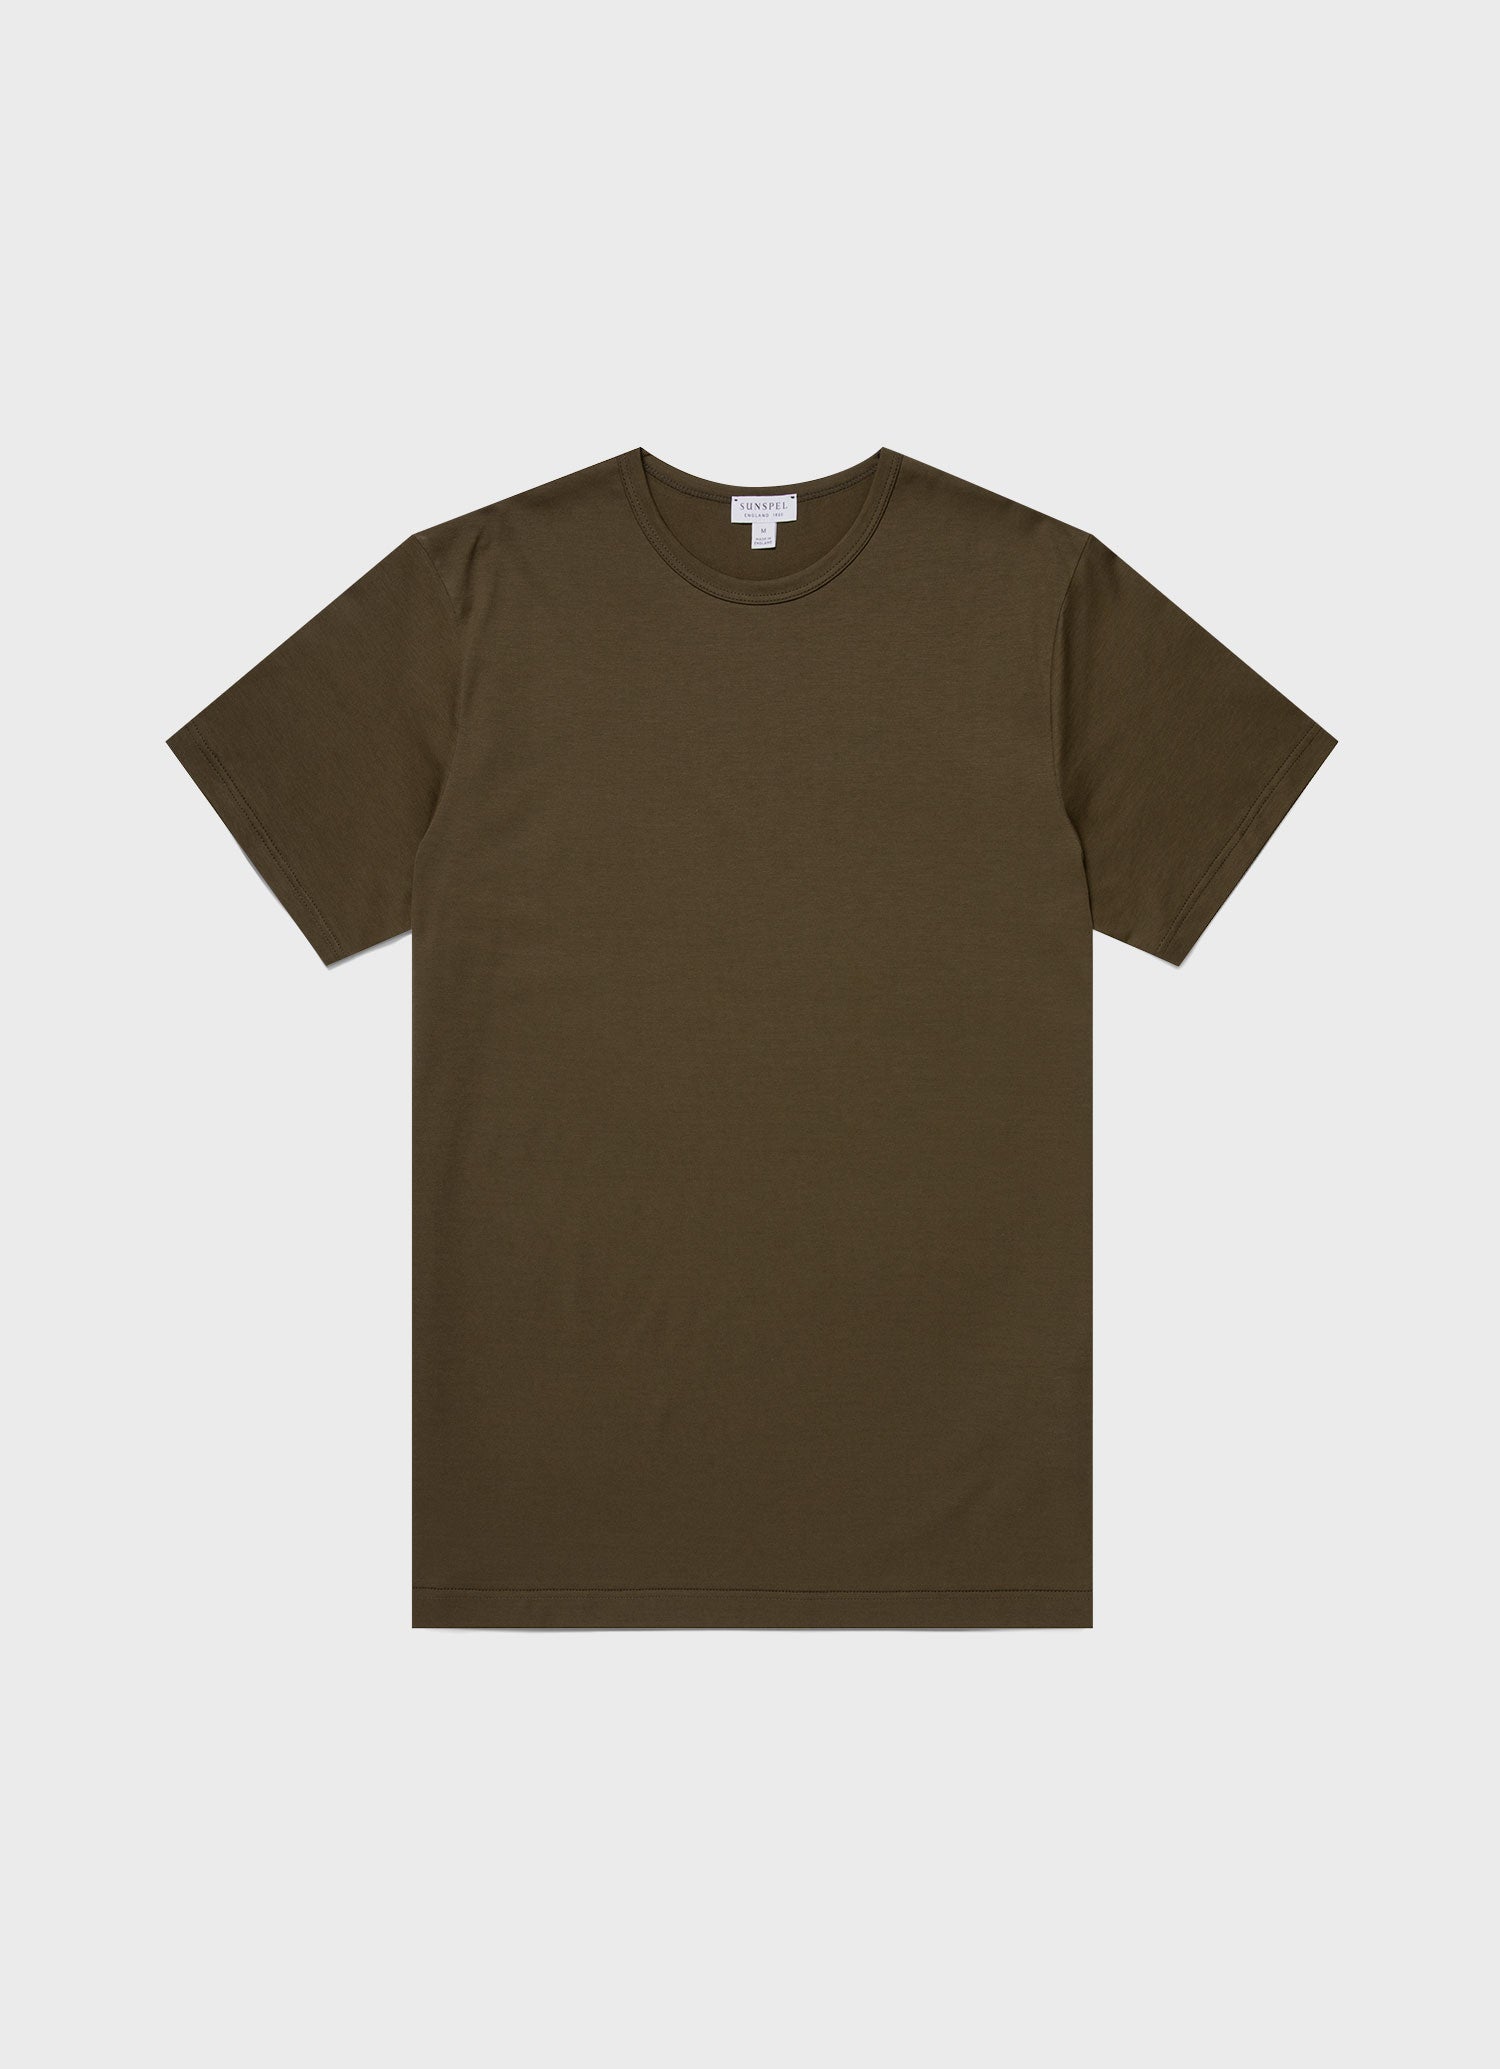 Men\'s Classic T-shirt in Dark Olive | Sunspel